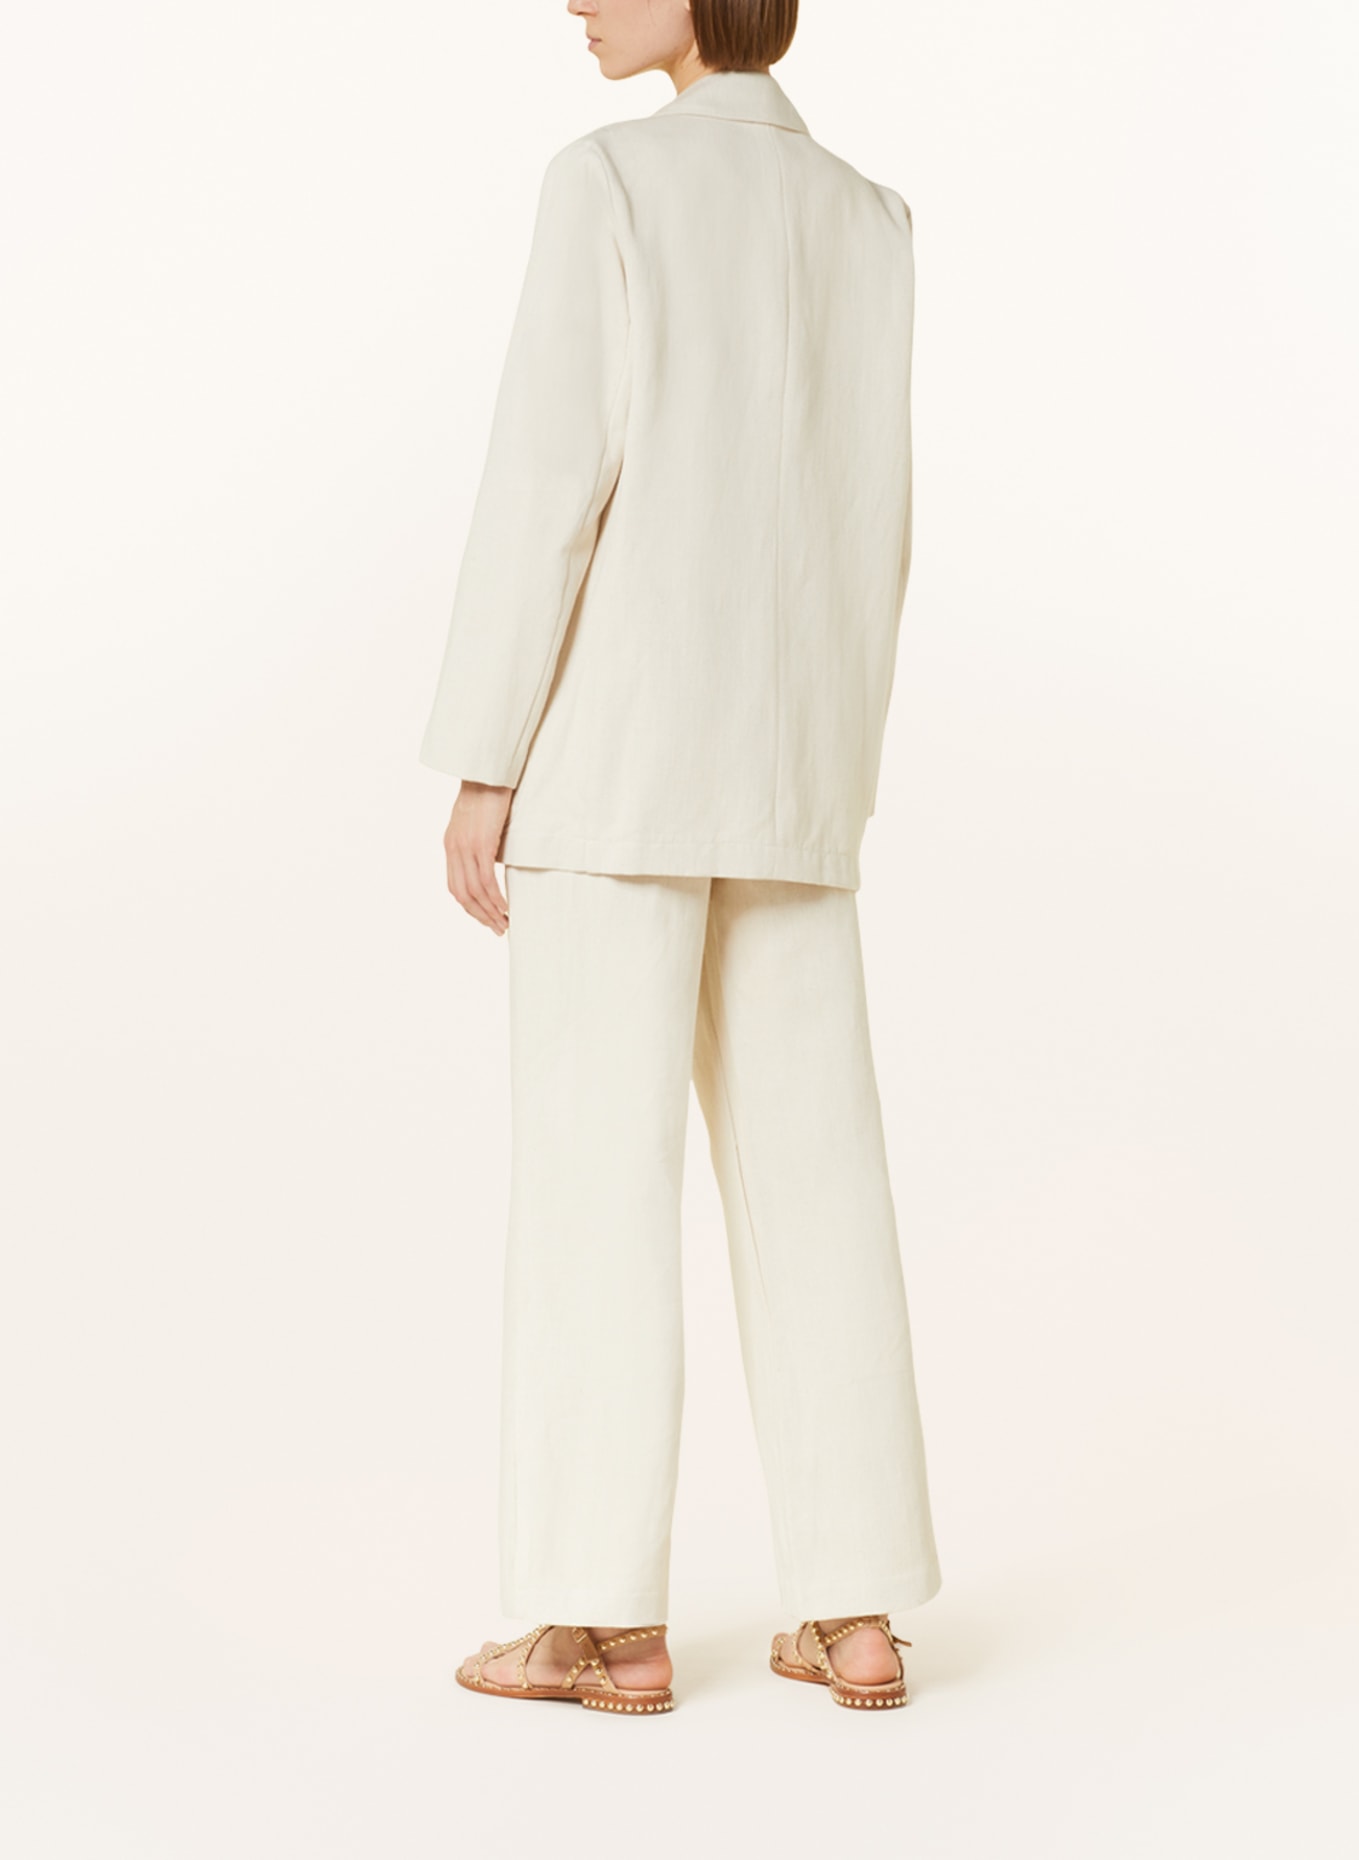 GITTA BANKO Blazer with linen, Color: CREAM (Image 3)